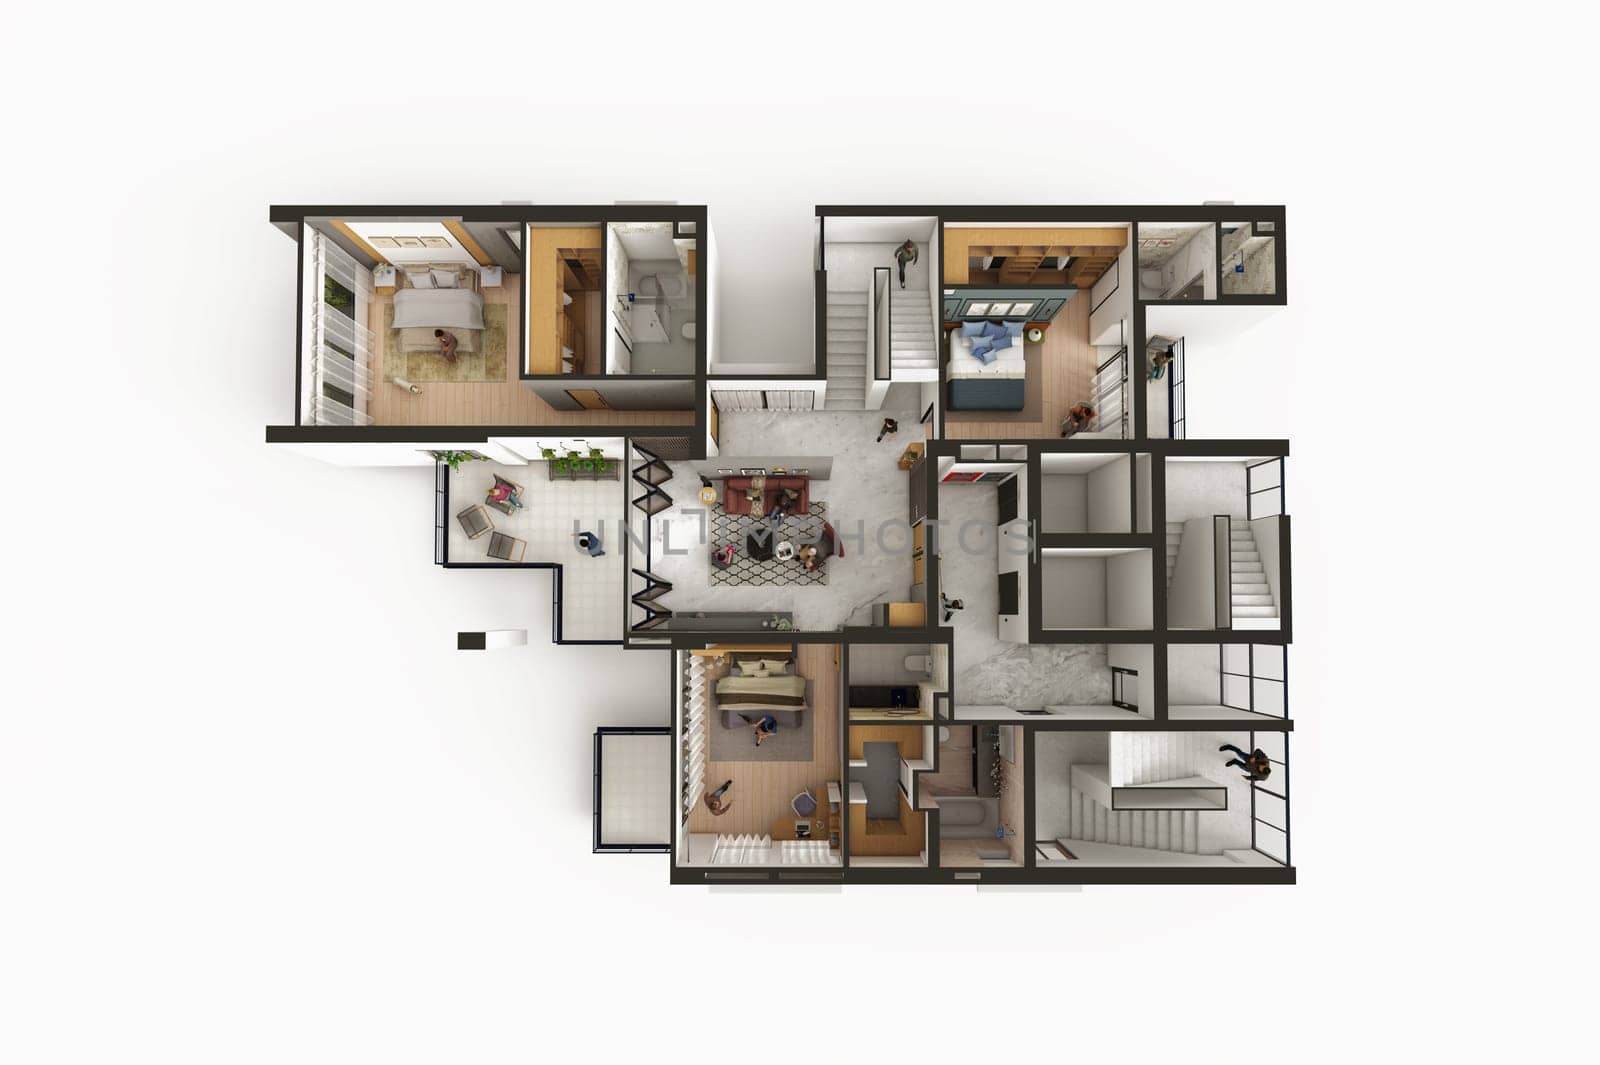 4 bedroom Duplex Apartment typical floor plan 2 by shawlinmohd